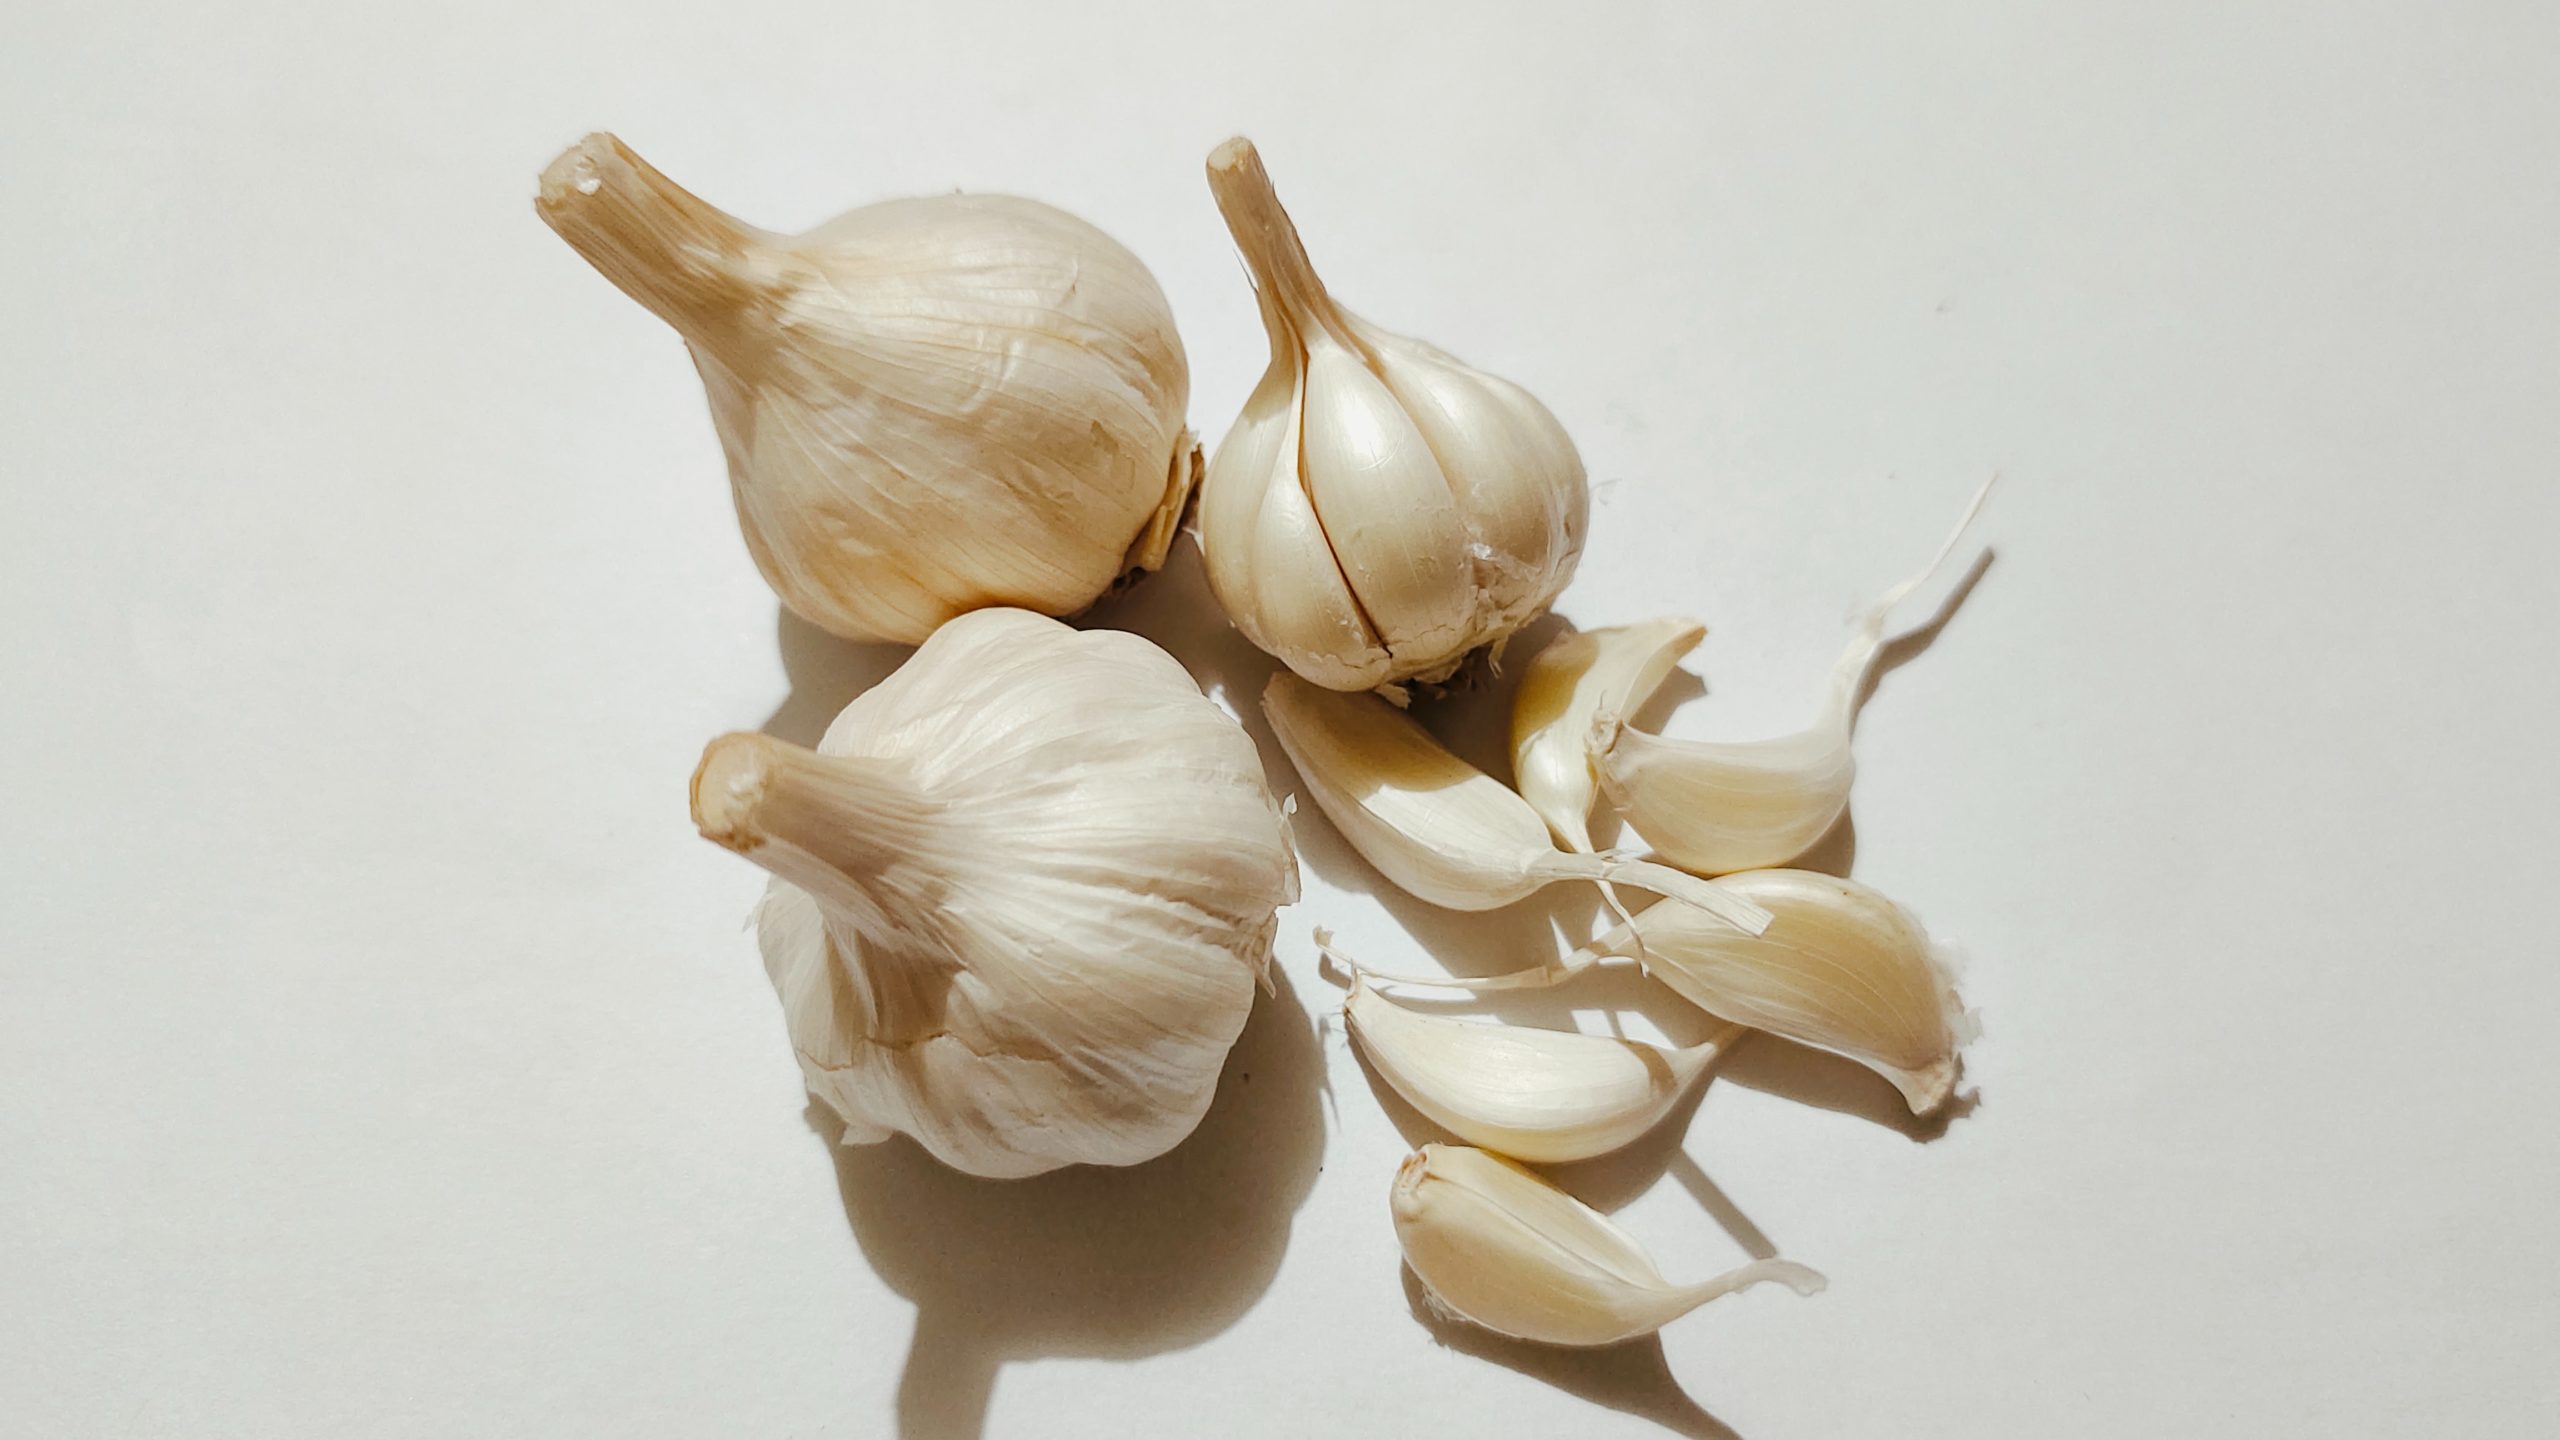 100g garlic